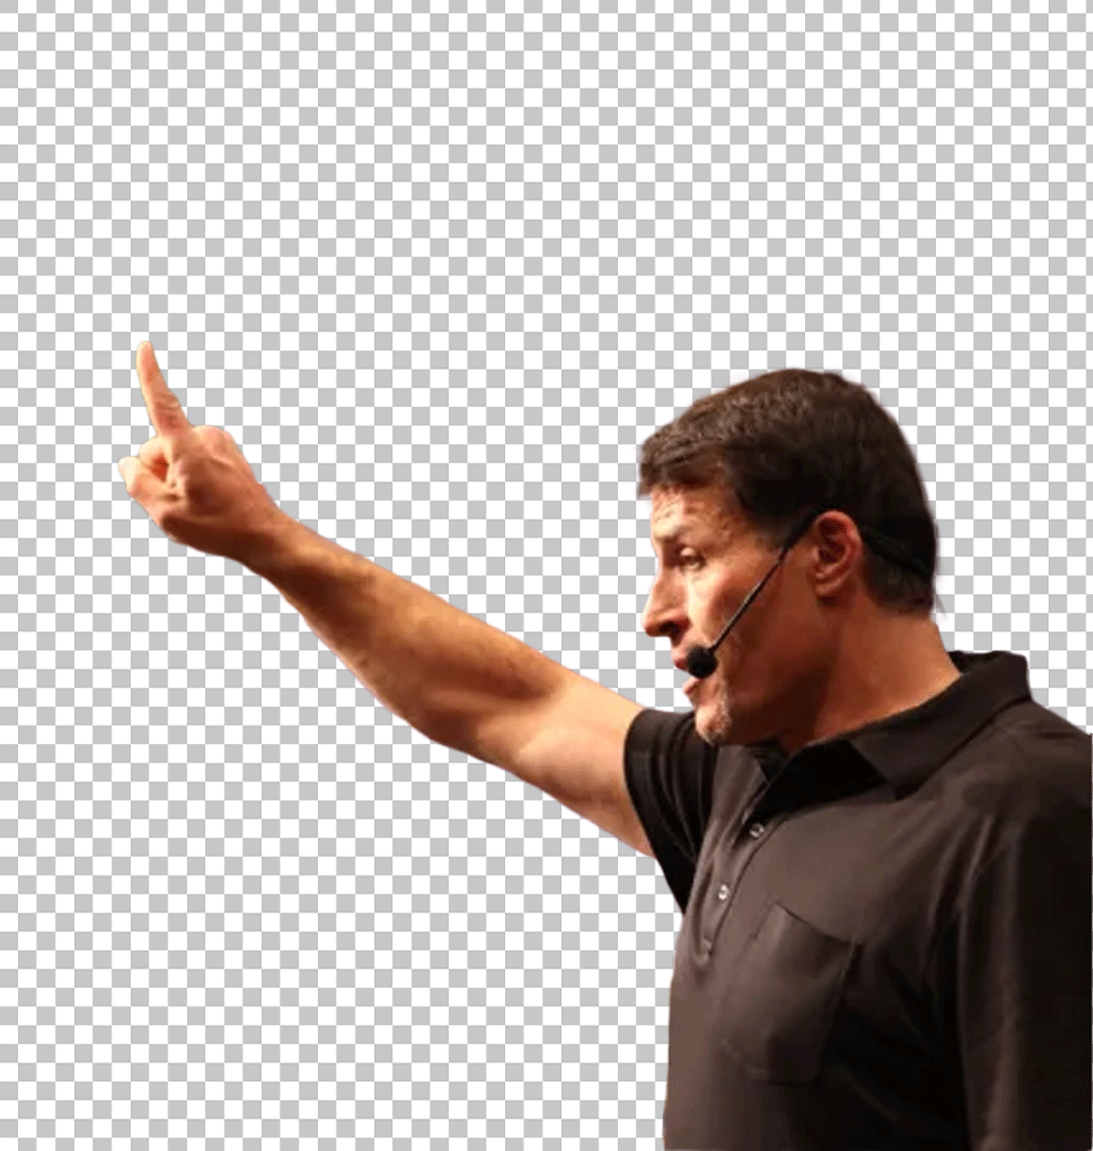 Tony Robbins Pointing Up PNG Image